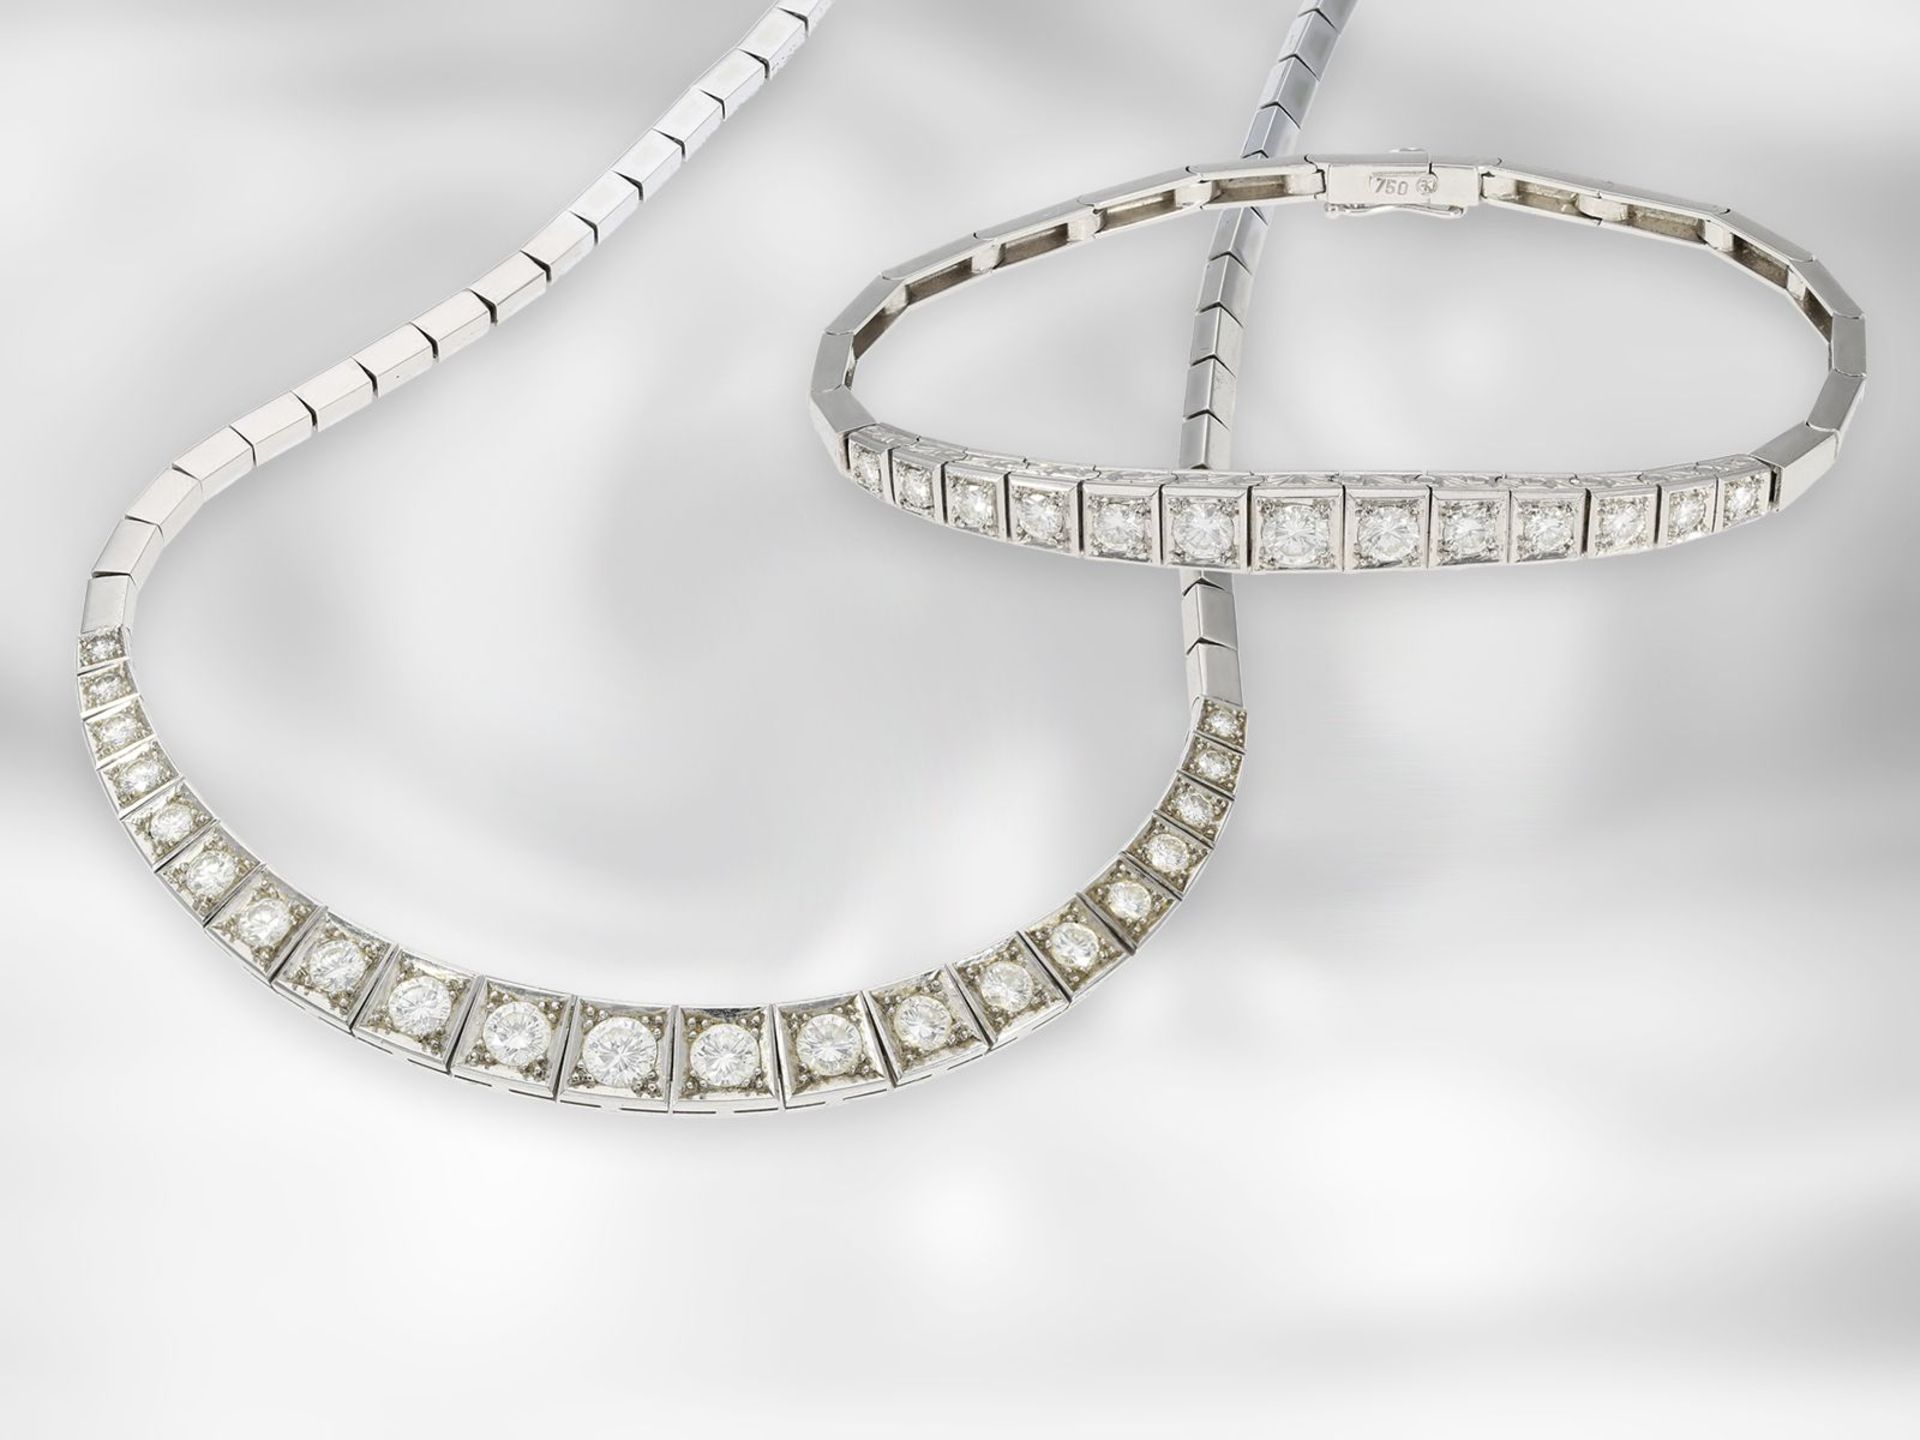 Fine vintage diamond goldsmith necklace with matching bracelet, handmade, approx. 4ct diamonds